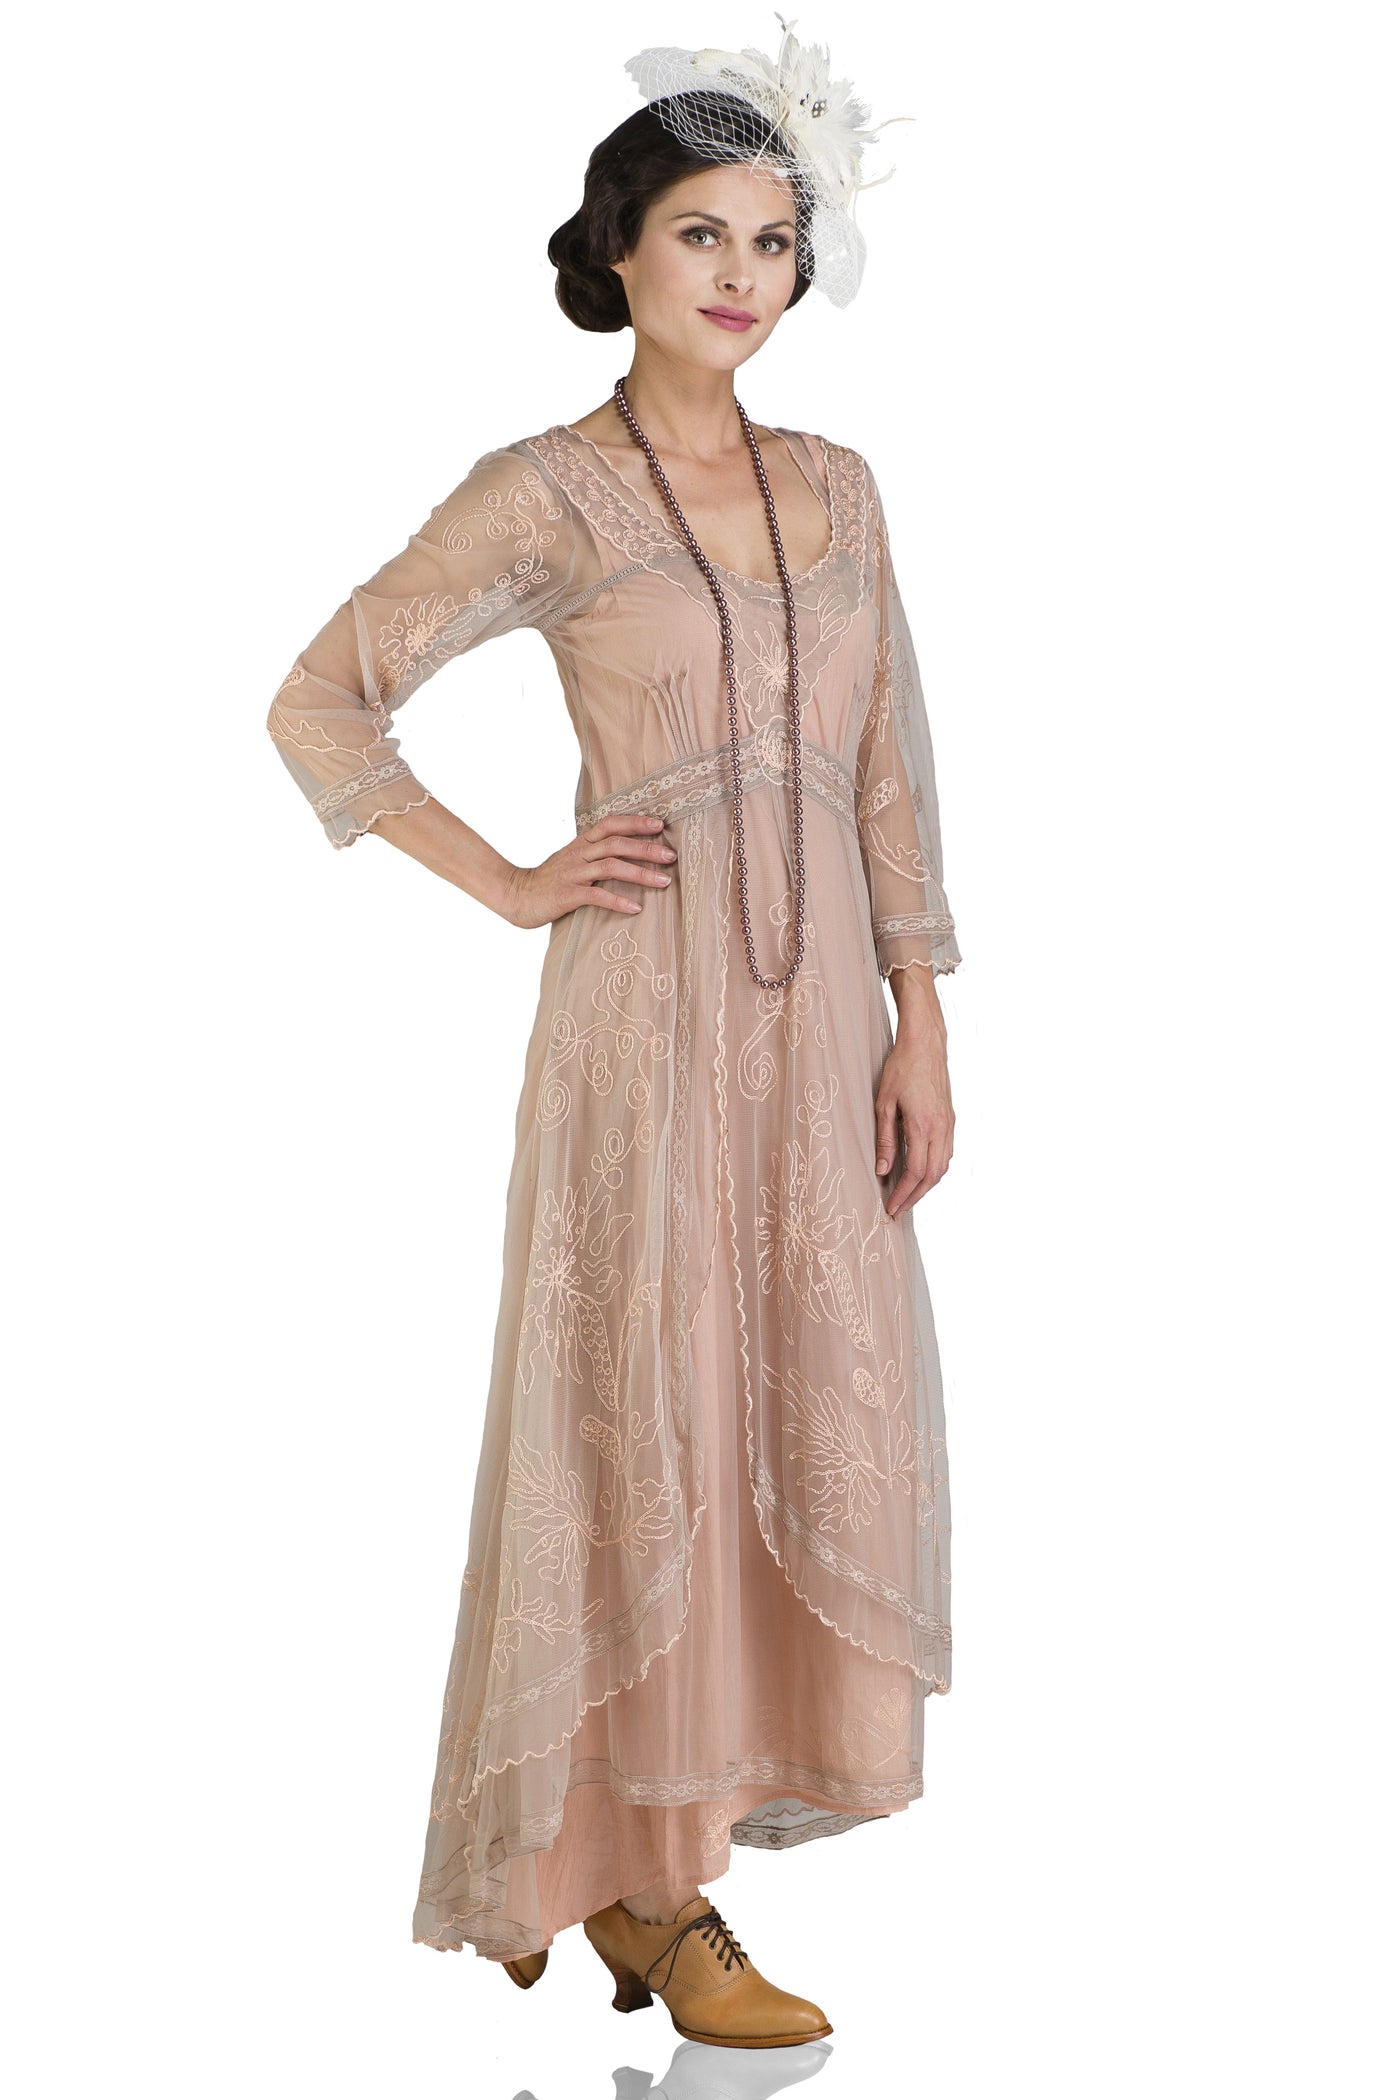 Downton Abbey Tea Party Gown 40163 in Quartz by Nataya